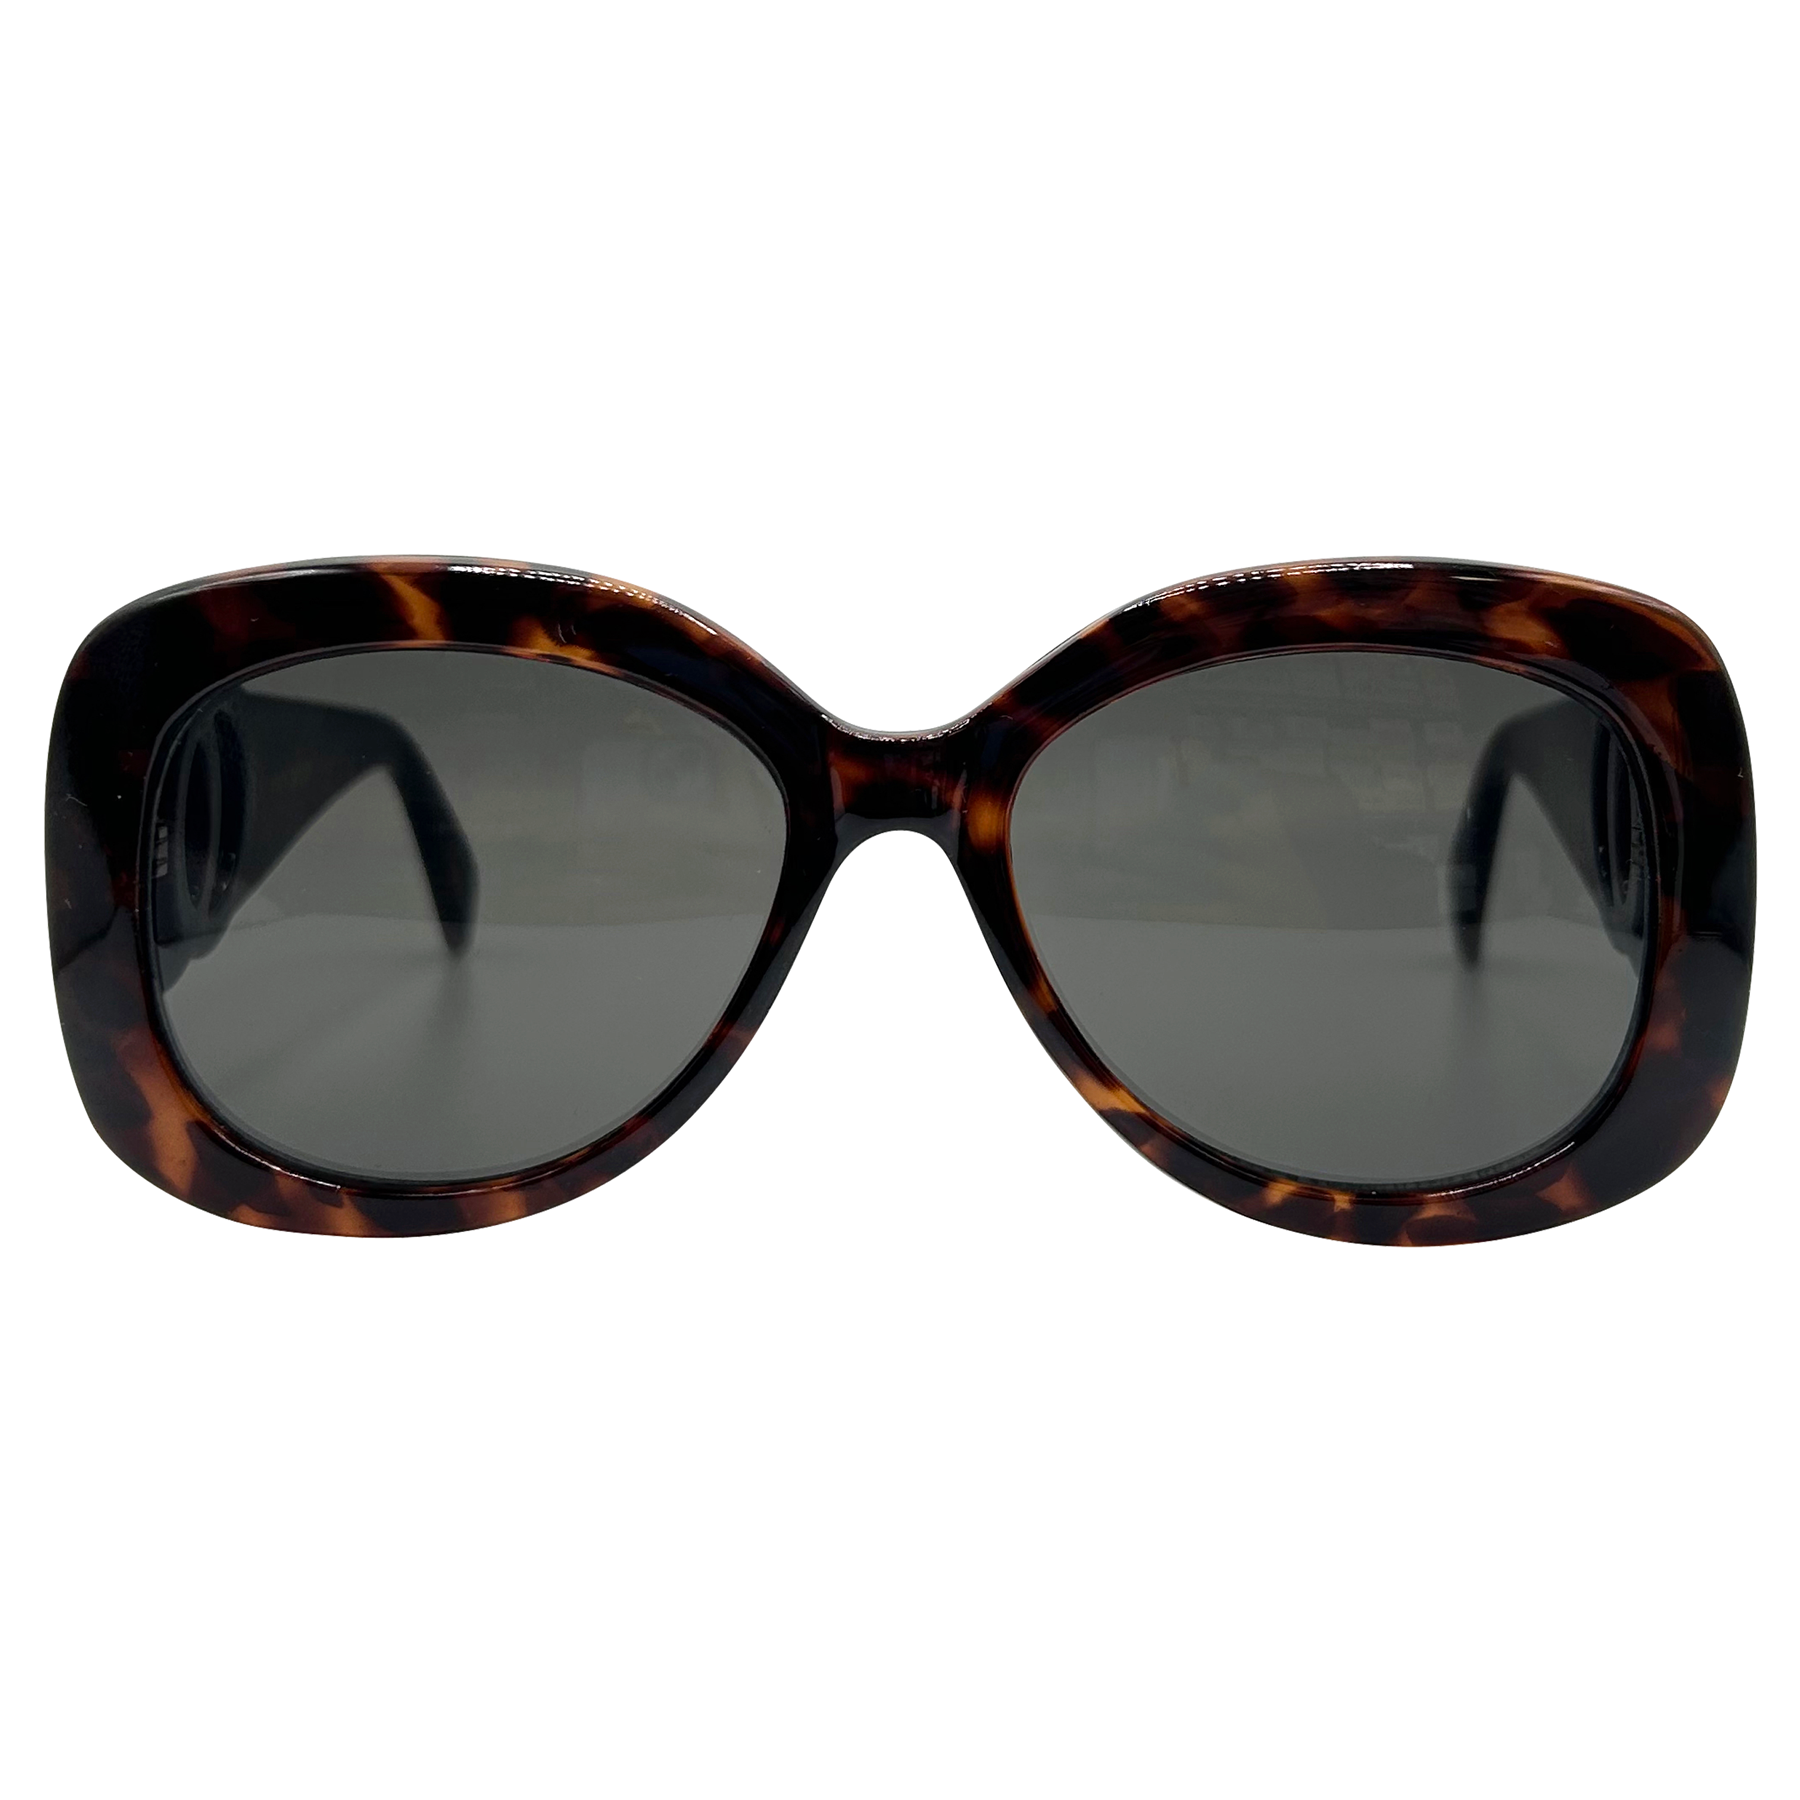 BESITOS Tortoise/Super Dark Mod 90s Sunglasses